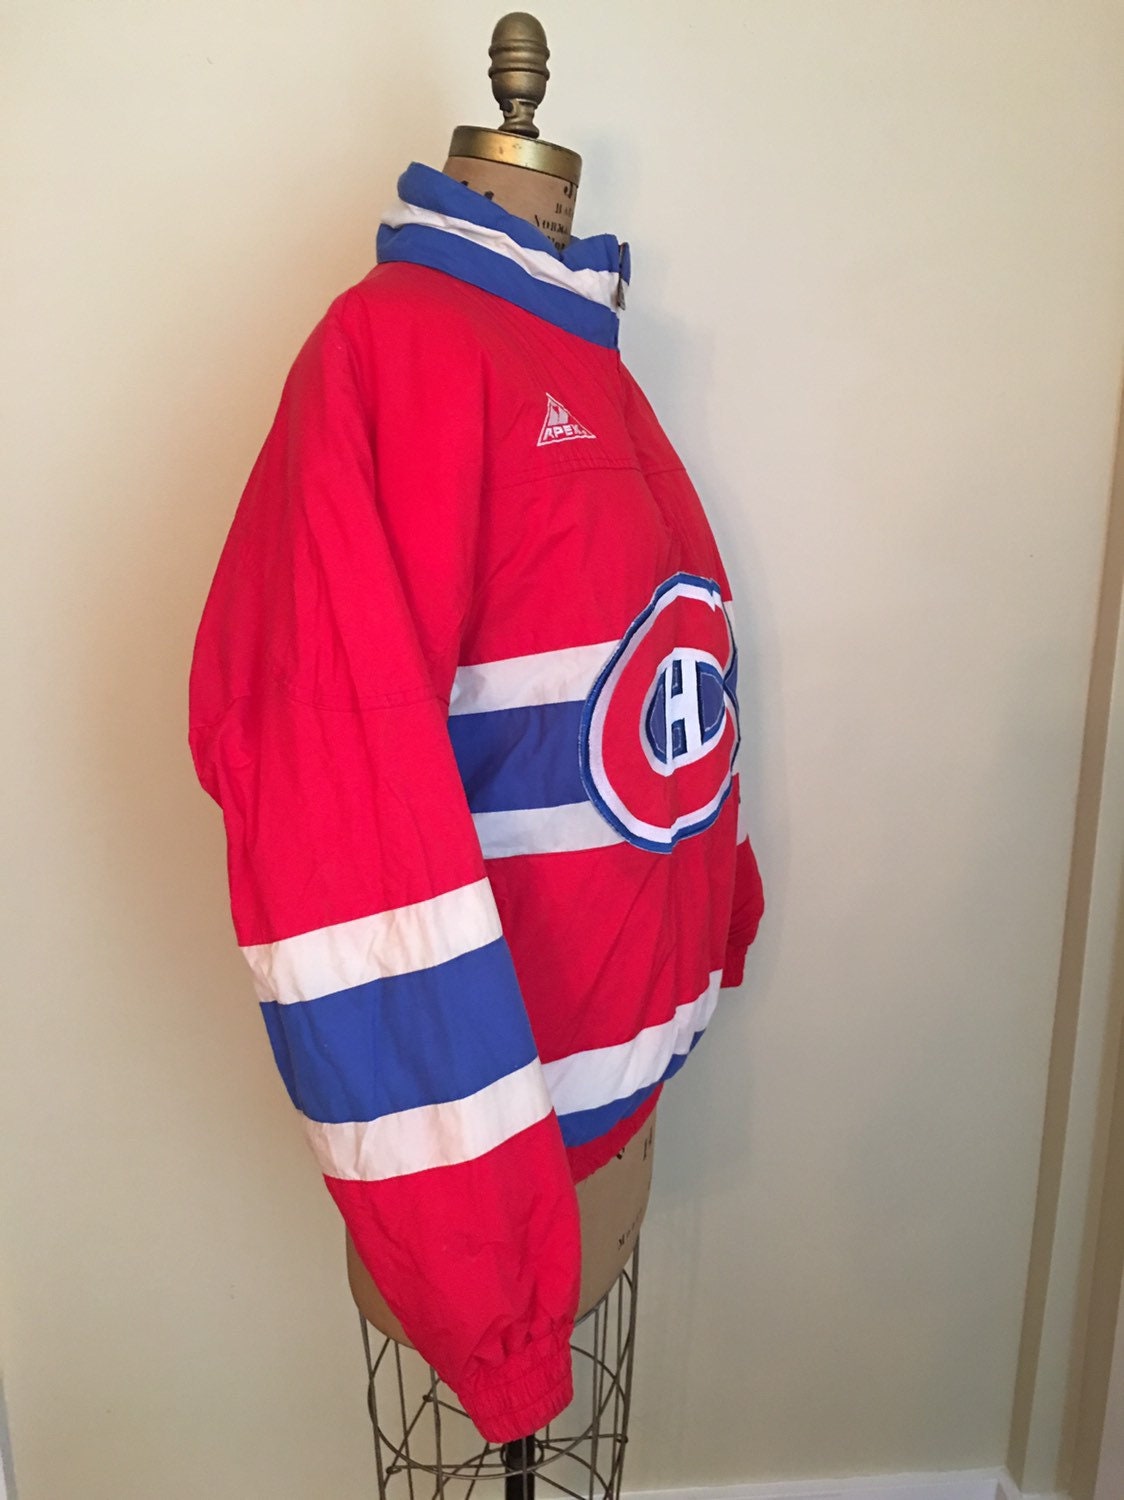 Vintage Montreal Canadiens Jacket National Hockey League Apex | Etsy